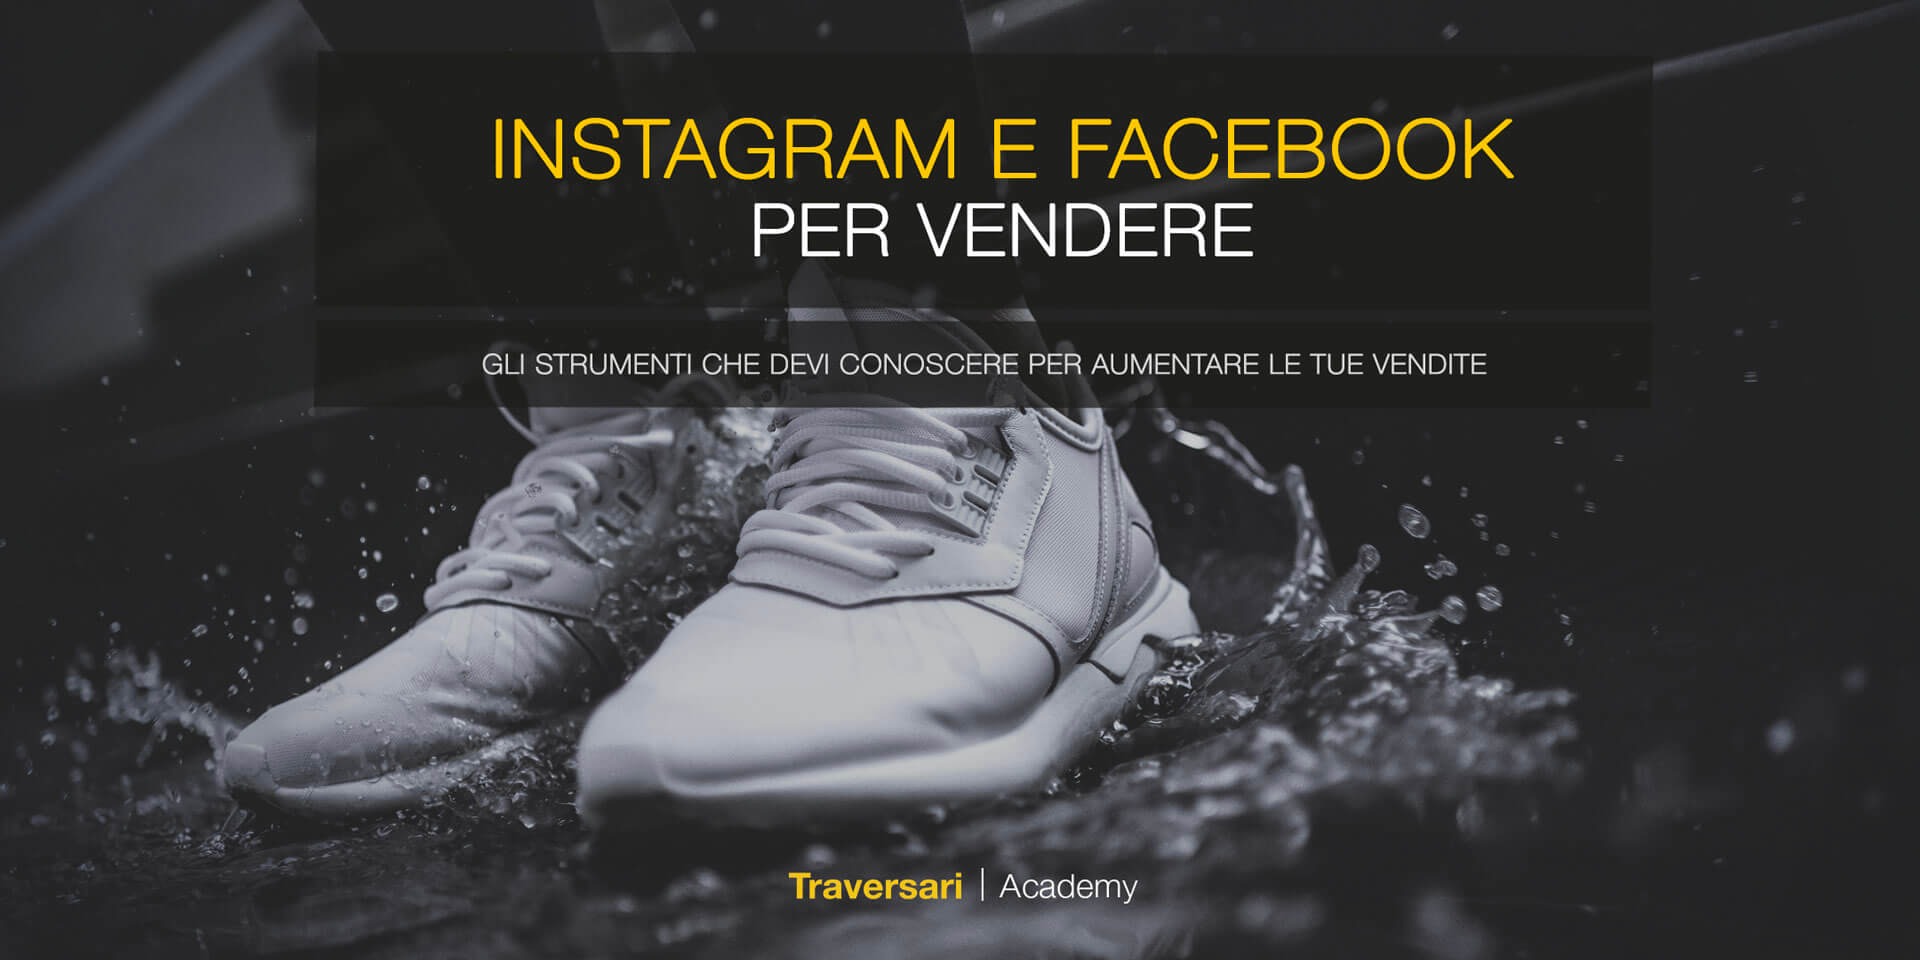 Corso-facebook-instagram-per-vendere